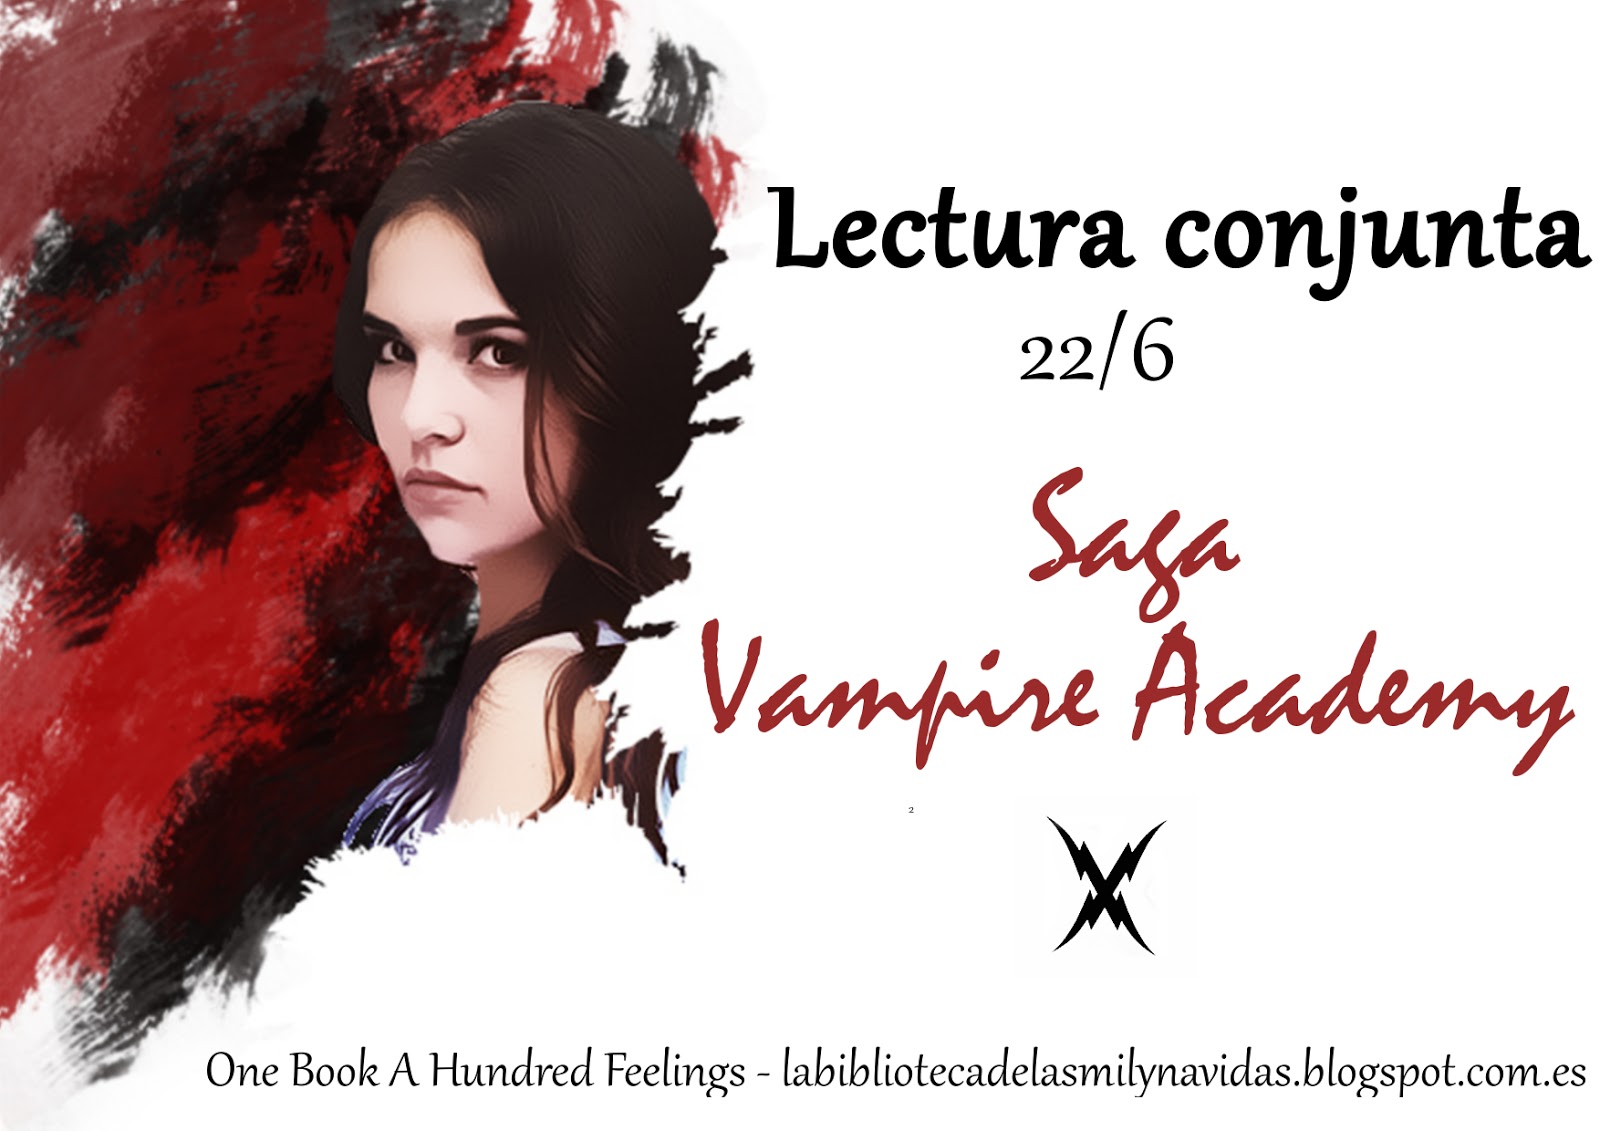 http://labibliotecadelasmilyunavidas.blogspot.com.es/2015/06/lectura-conjunta-vampire-academy-st.html